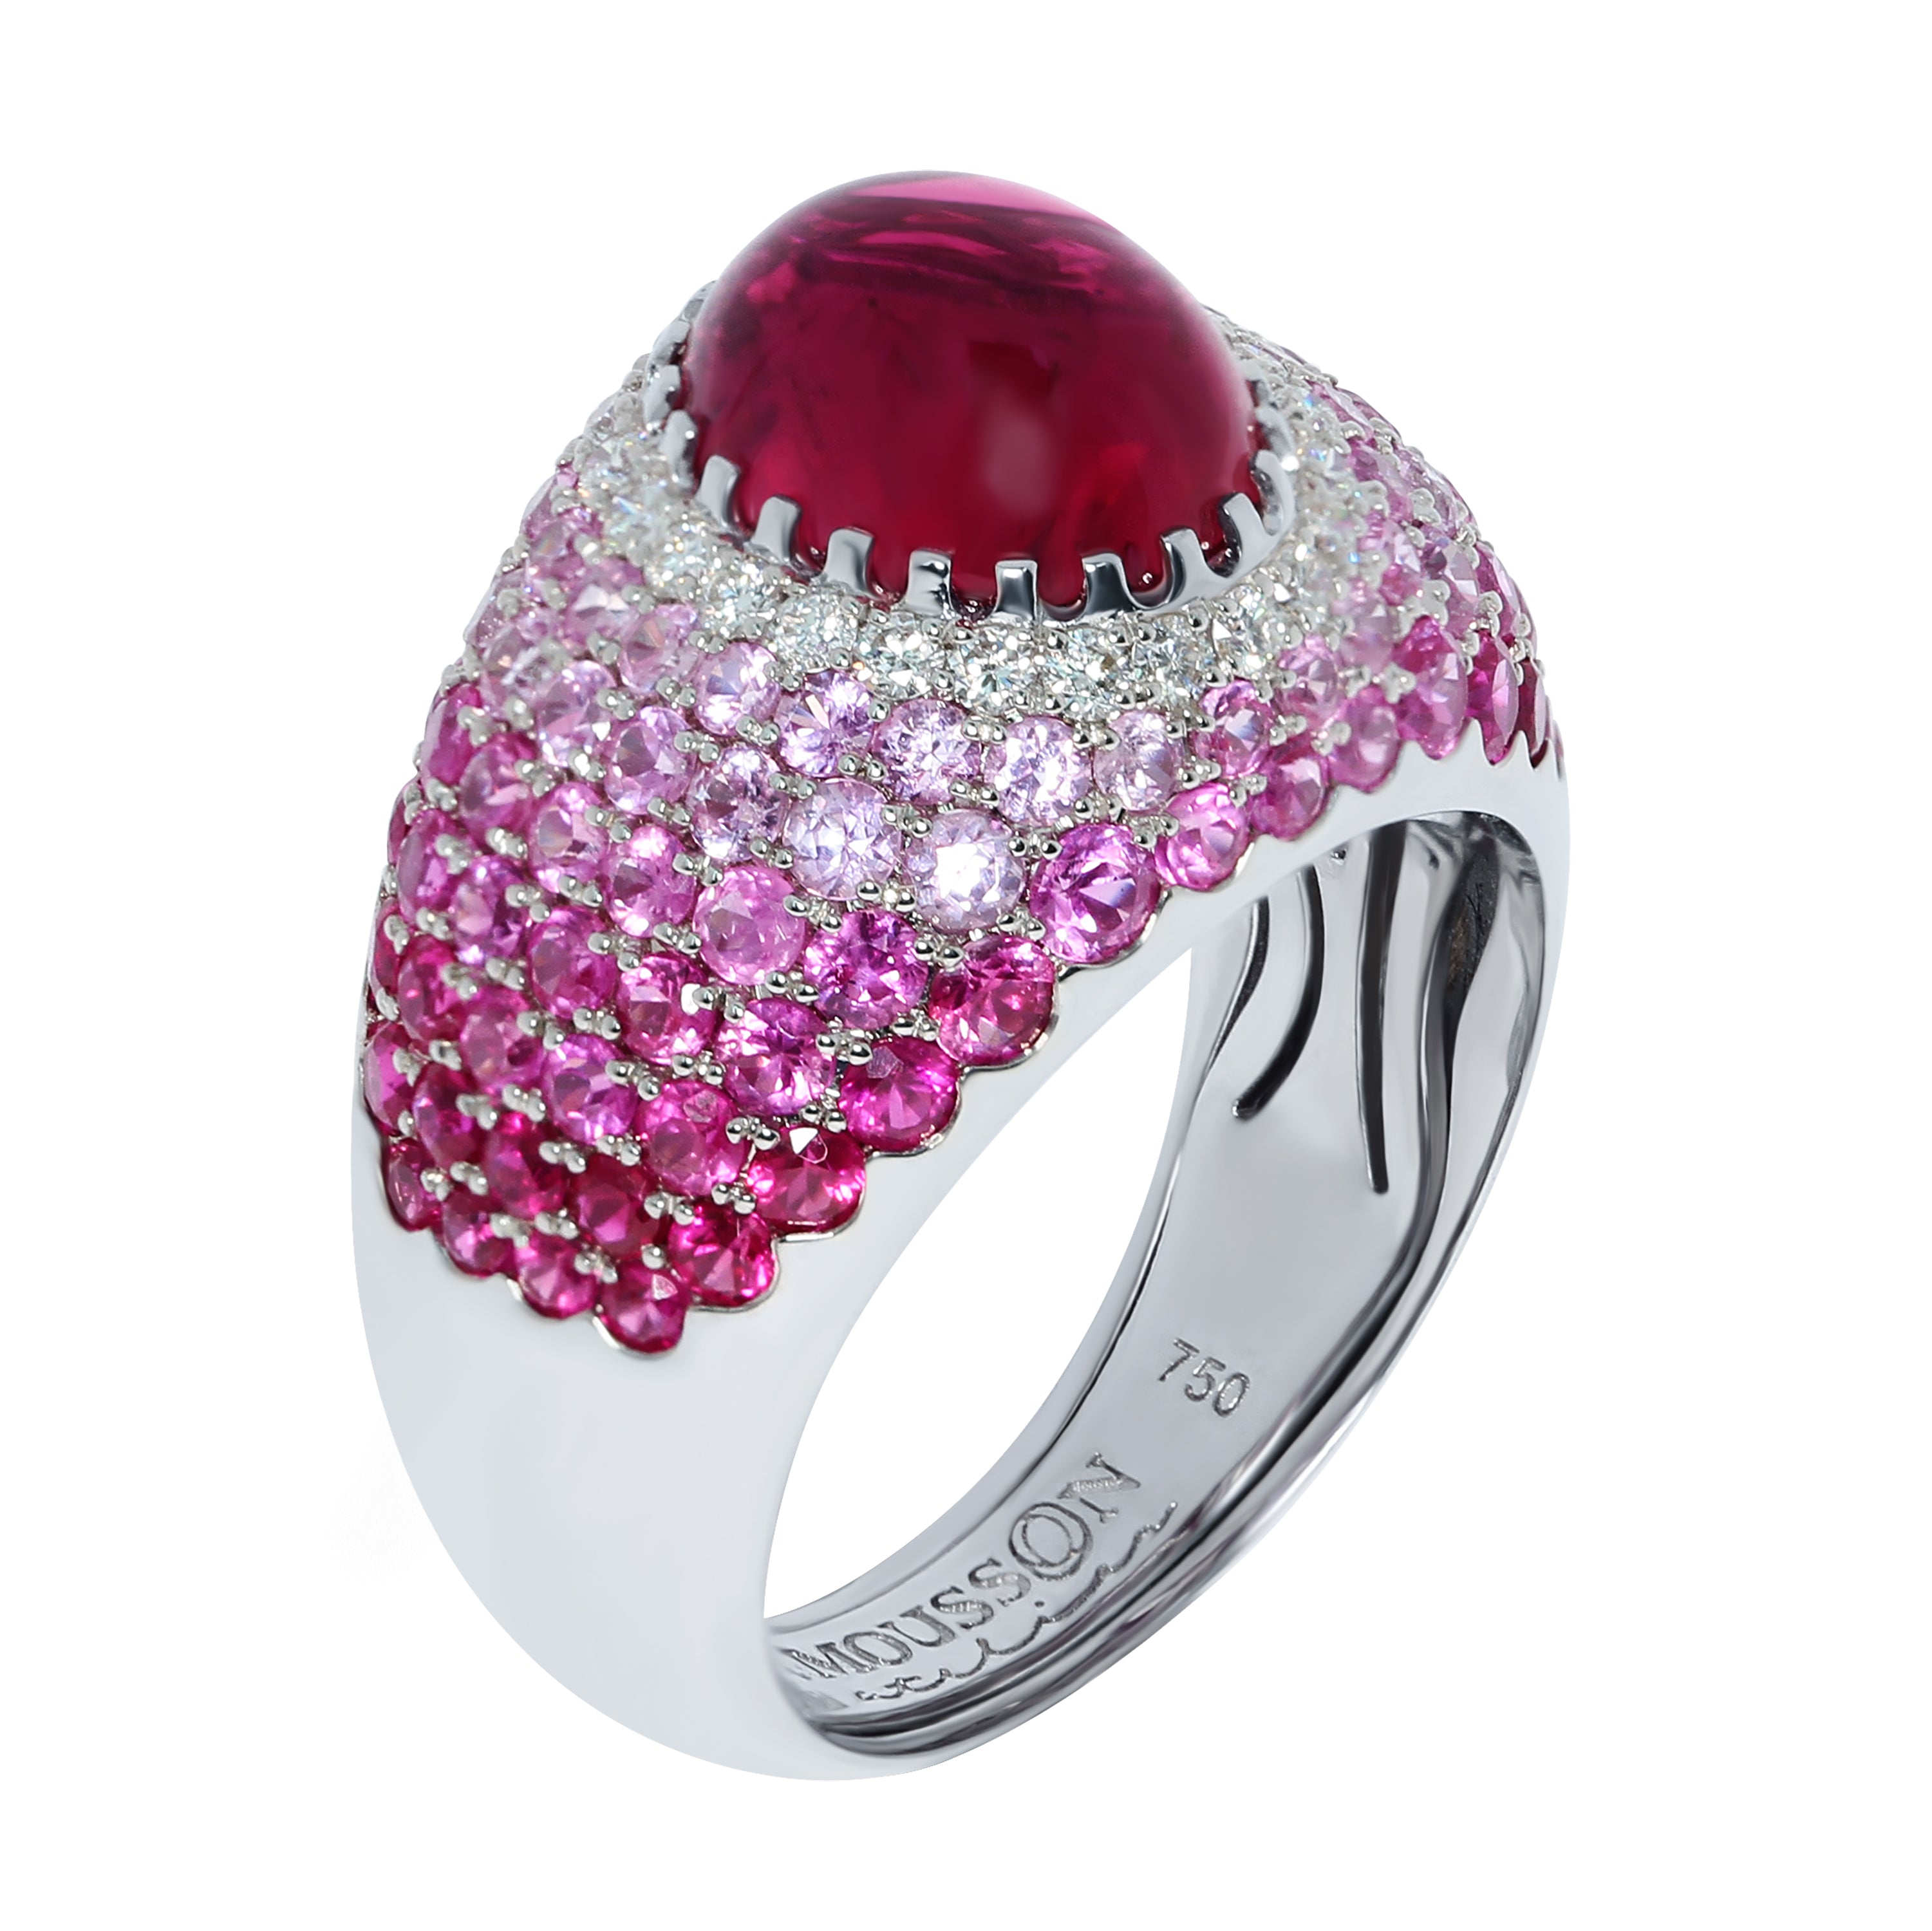 R 0072-0, 18K White Gold, Rubbelite, Diamonds, Ruby, Pink Sapphires Ring